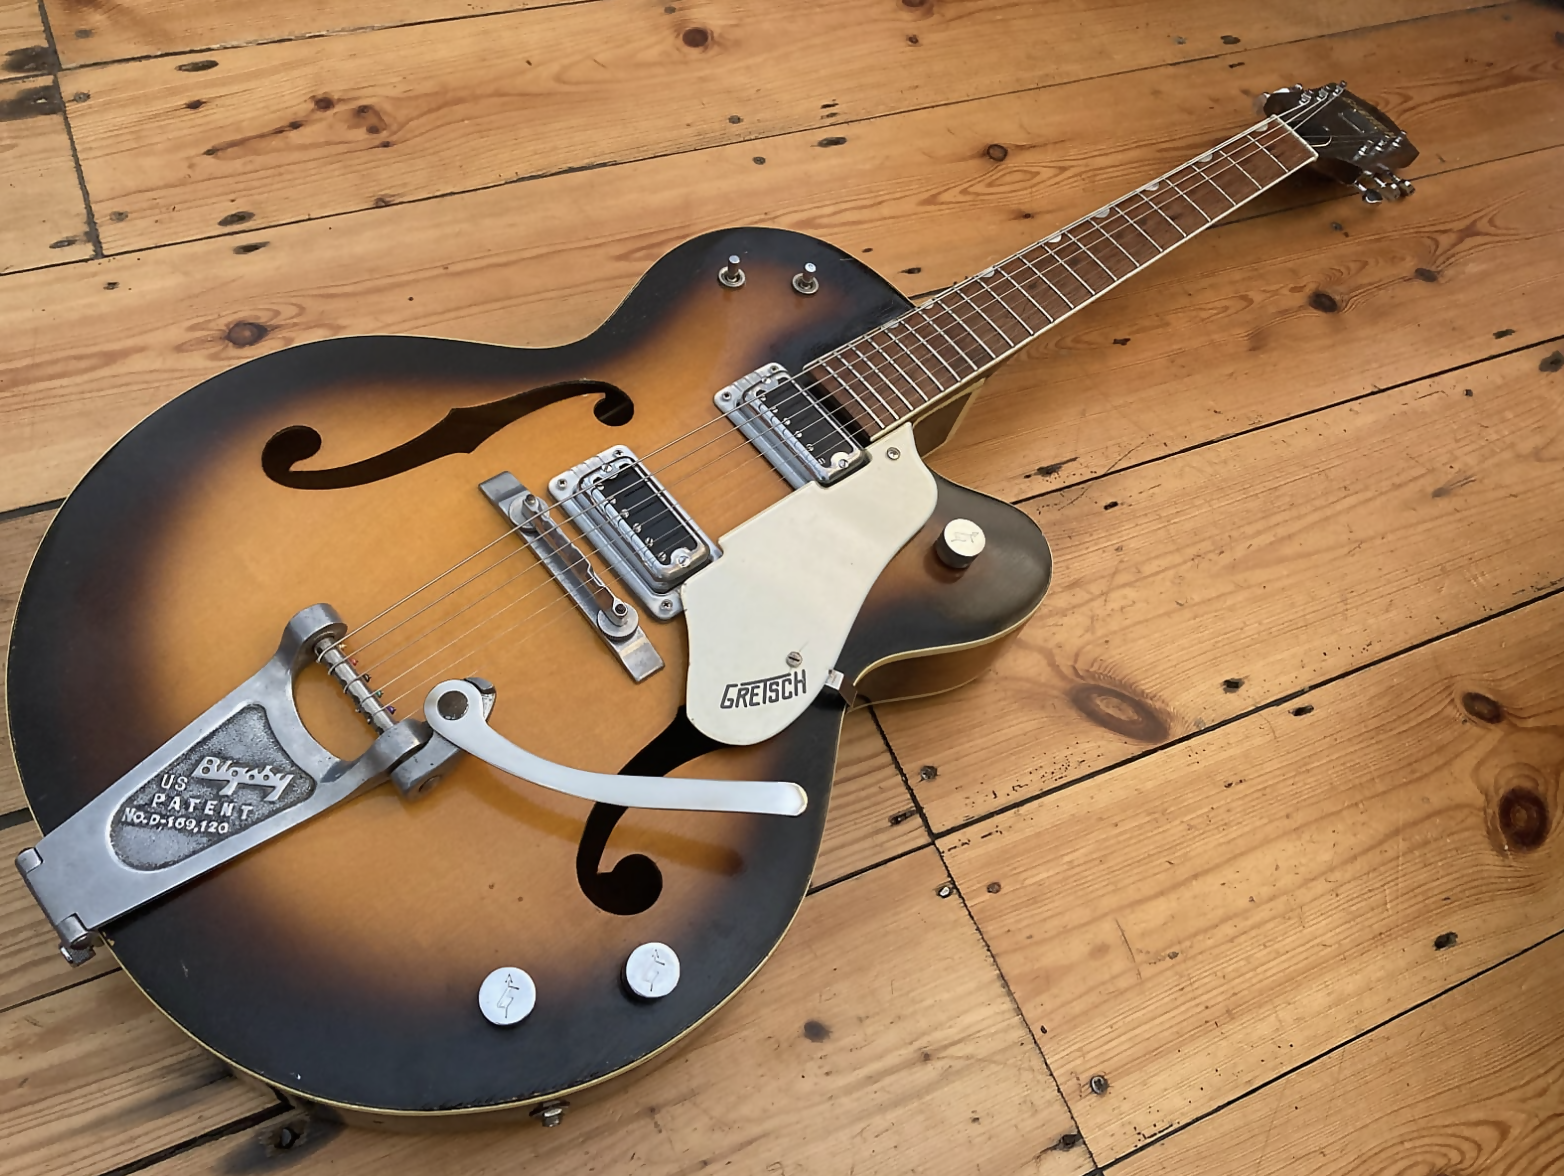 1963 Gretsch Model 6117T Anniversary Electric Guitar - Made in USA - Vintage - Roadworn